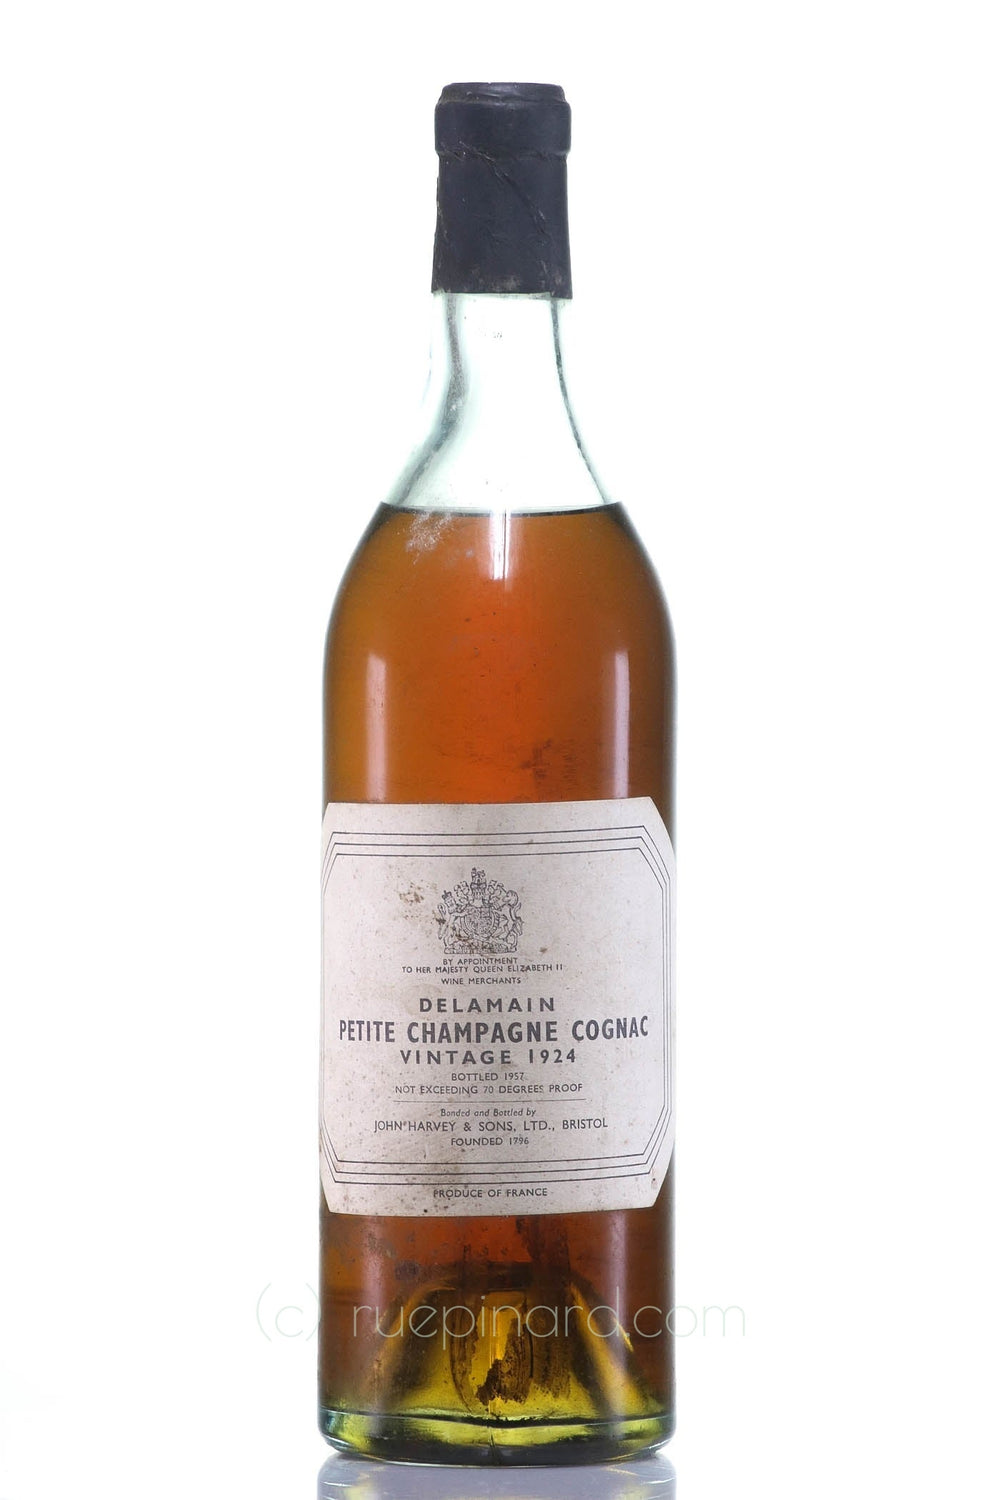 1924 Delamain Vintage Petit Champagne Cognac, John Harvey & Sons, Bottled '57 - Rue Pinard